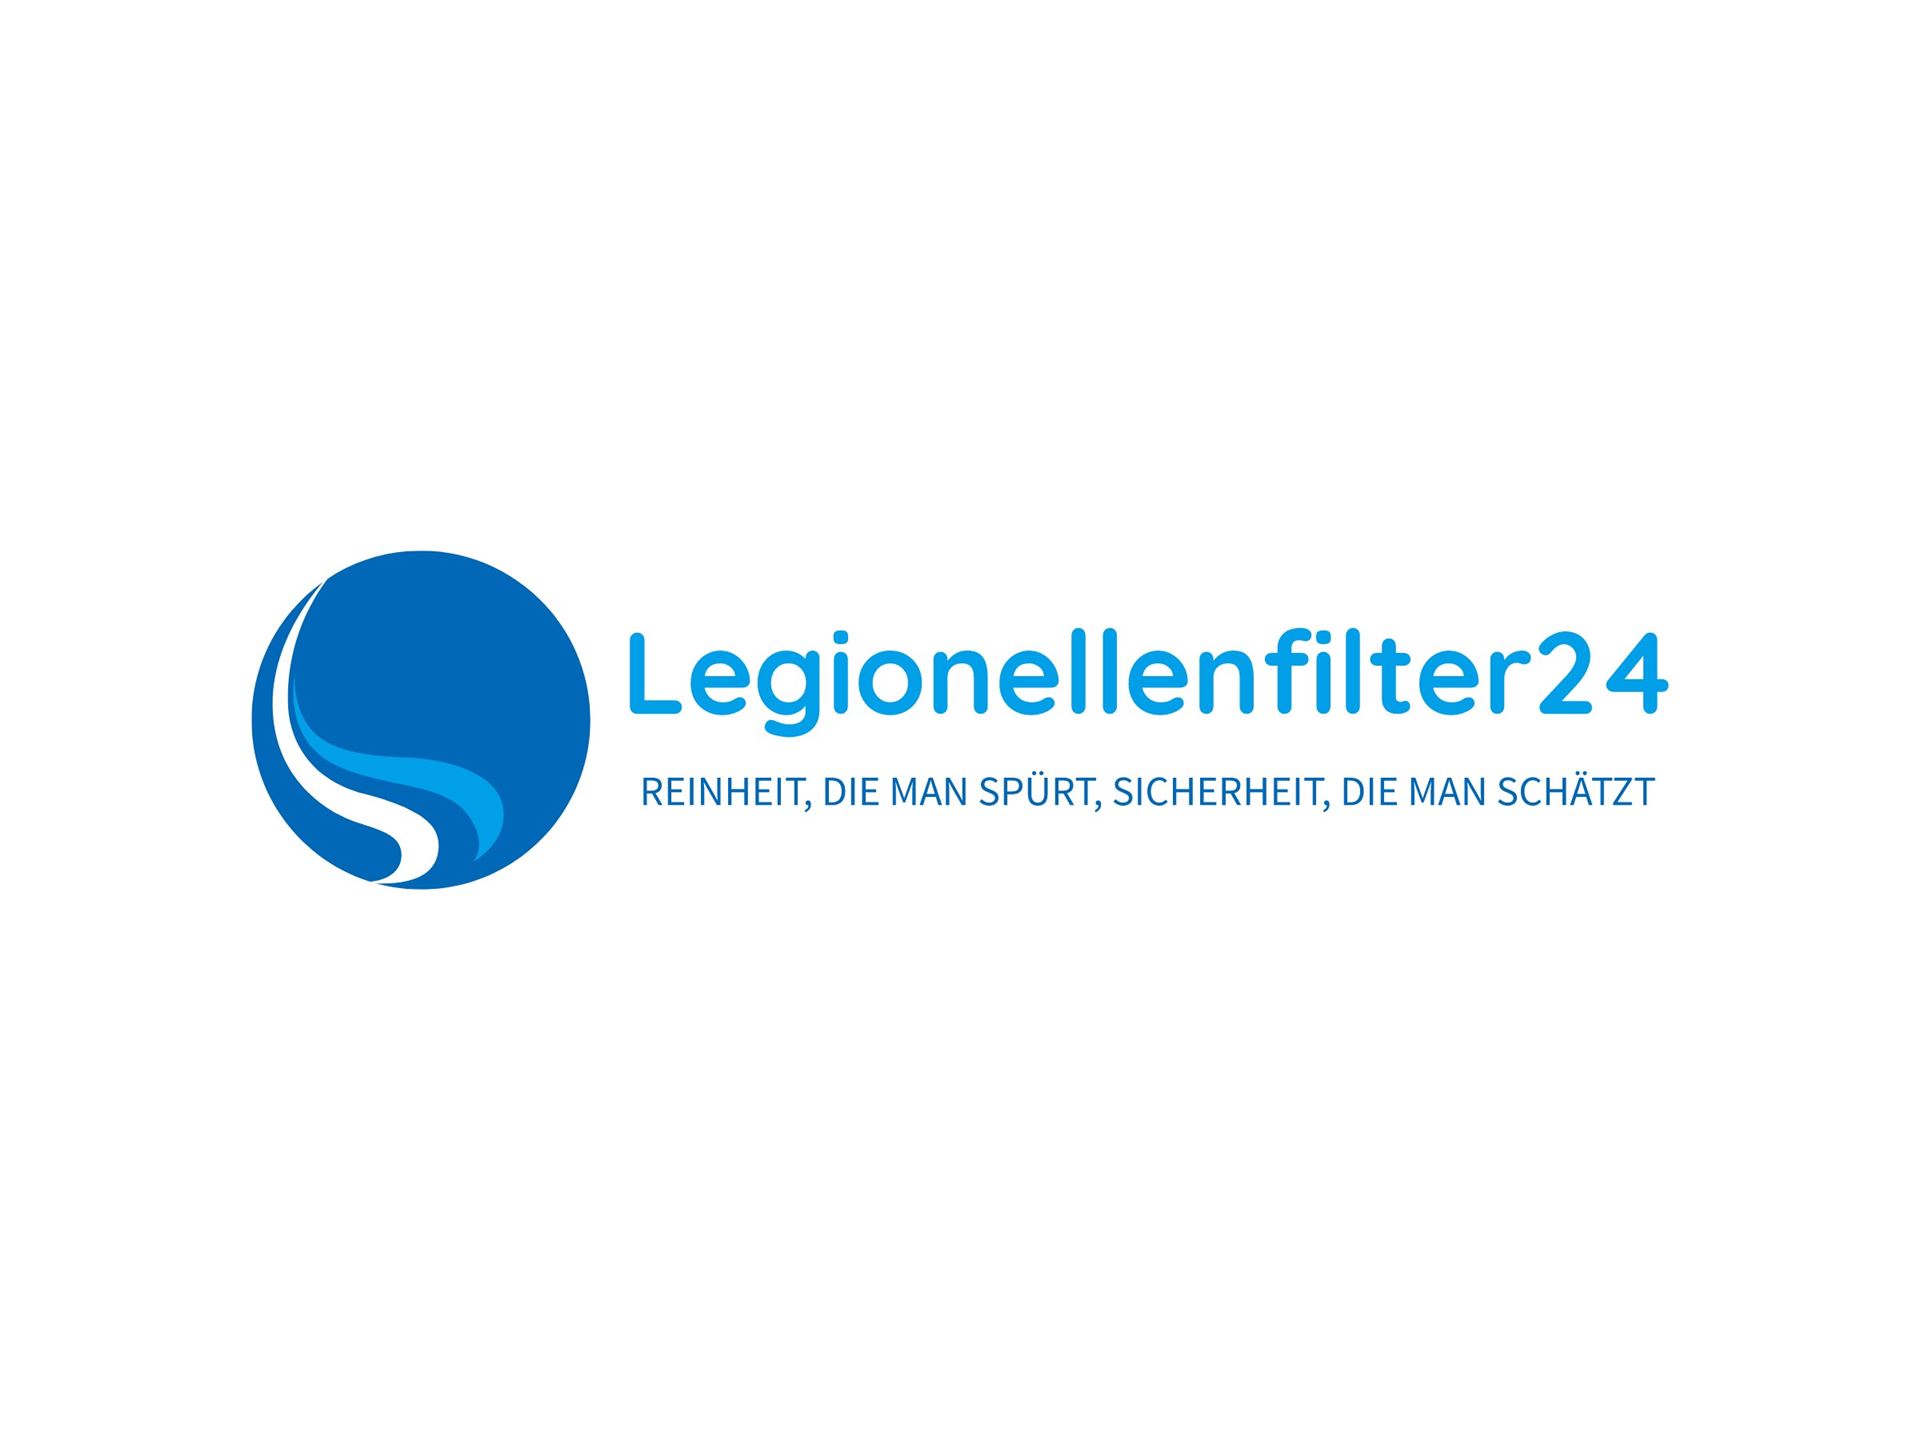 https://www.legionellenfilter24.de/images/pictures/legionellenfilter24-main-logo-2400x1800.jpg